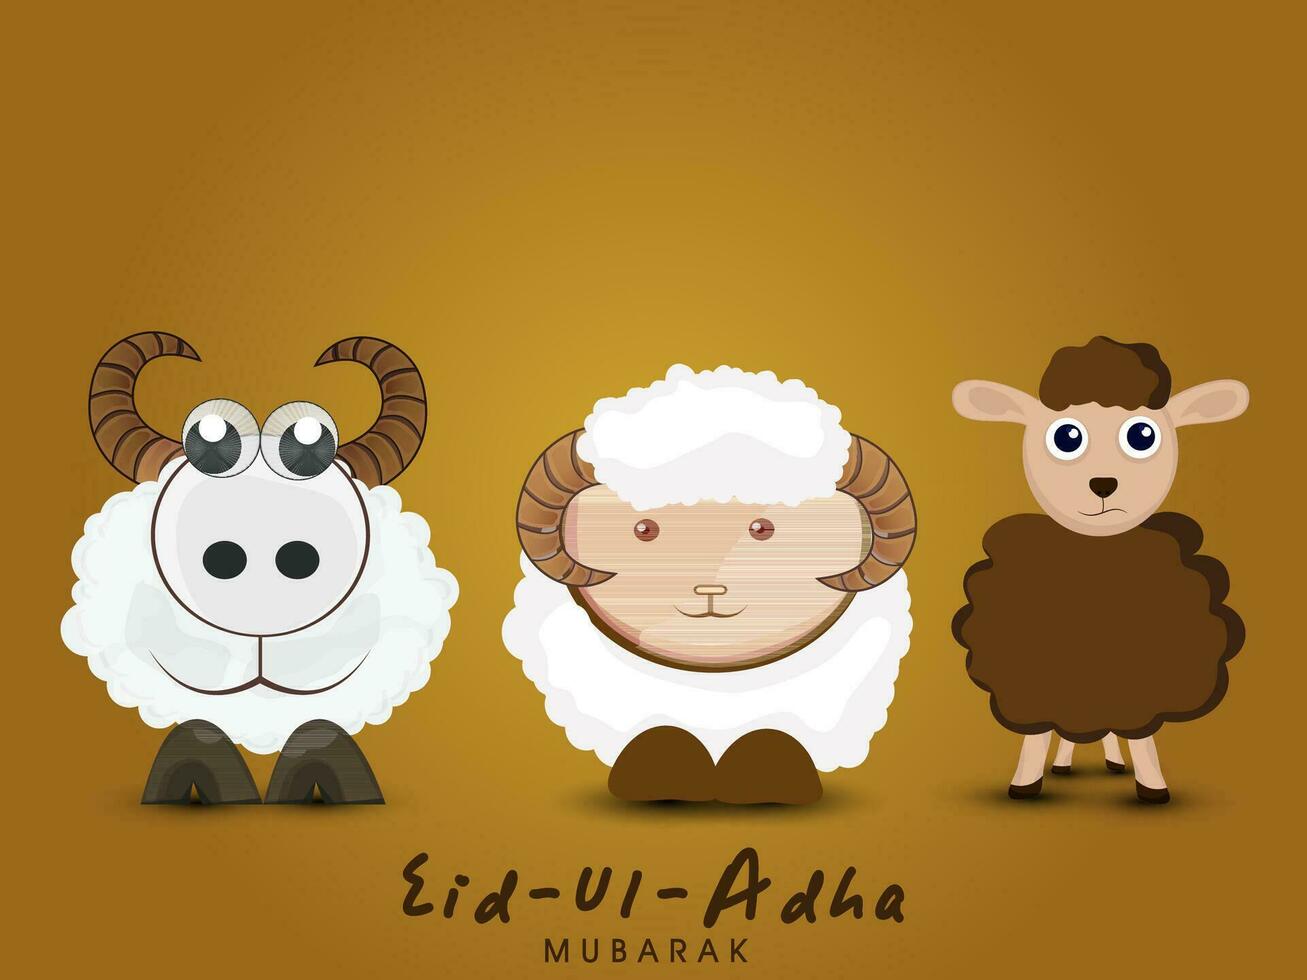 Eid-Ul-Adha Mubarak Greeting Card with Cartoon Illustration of Three Sheep Standing on Brown Background. vector